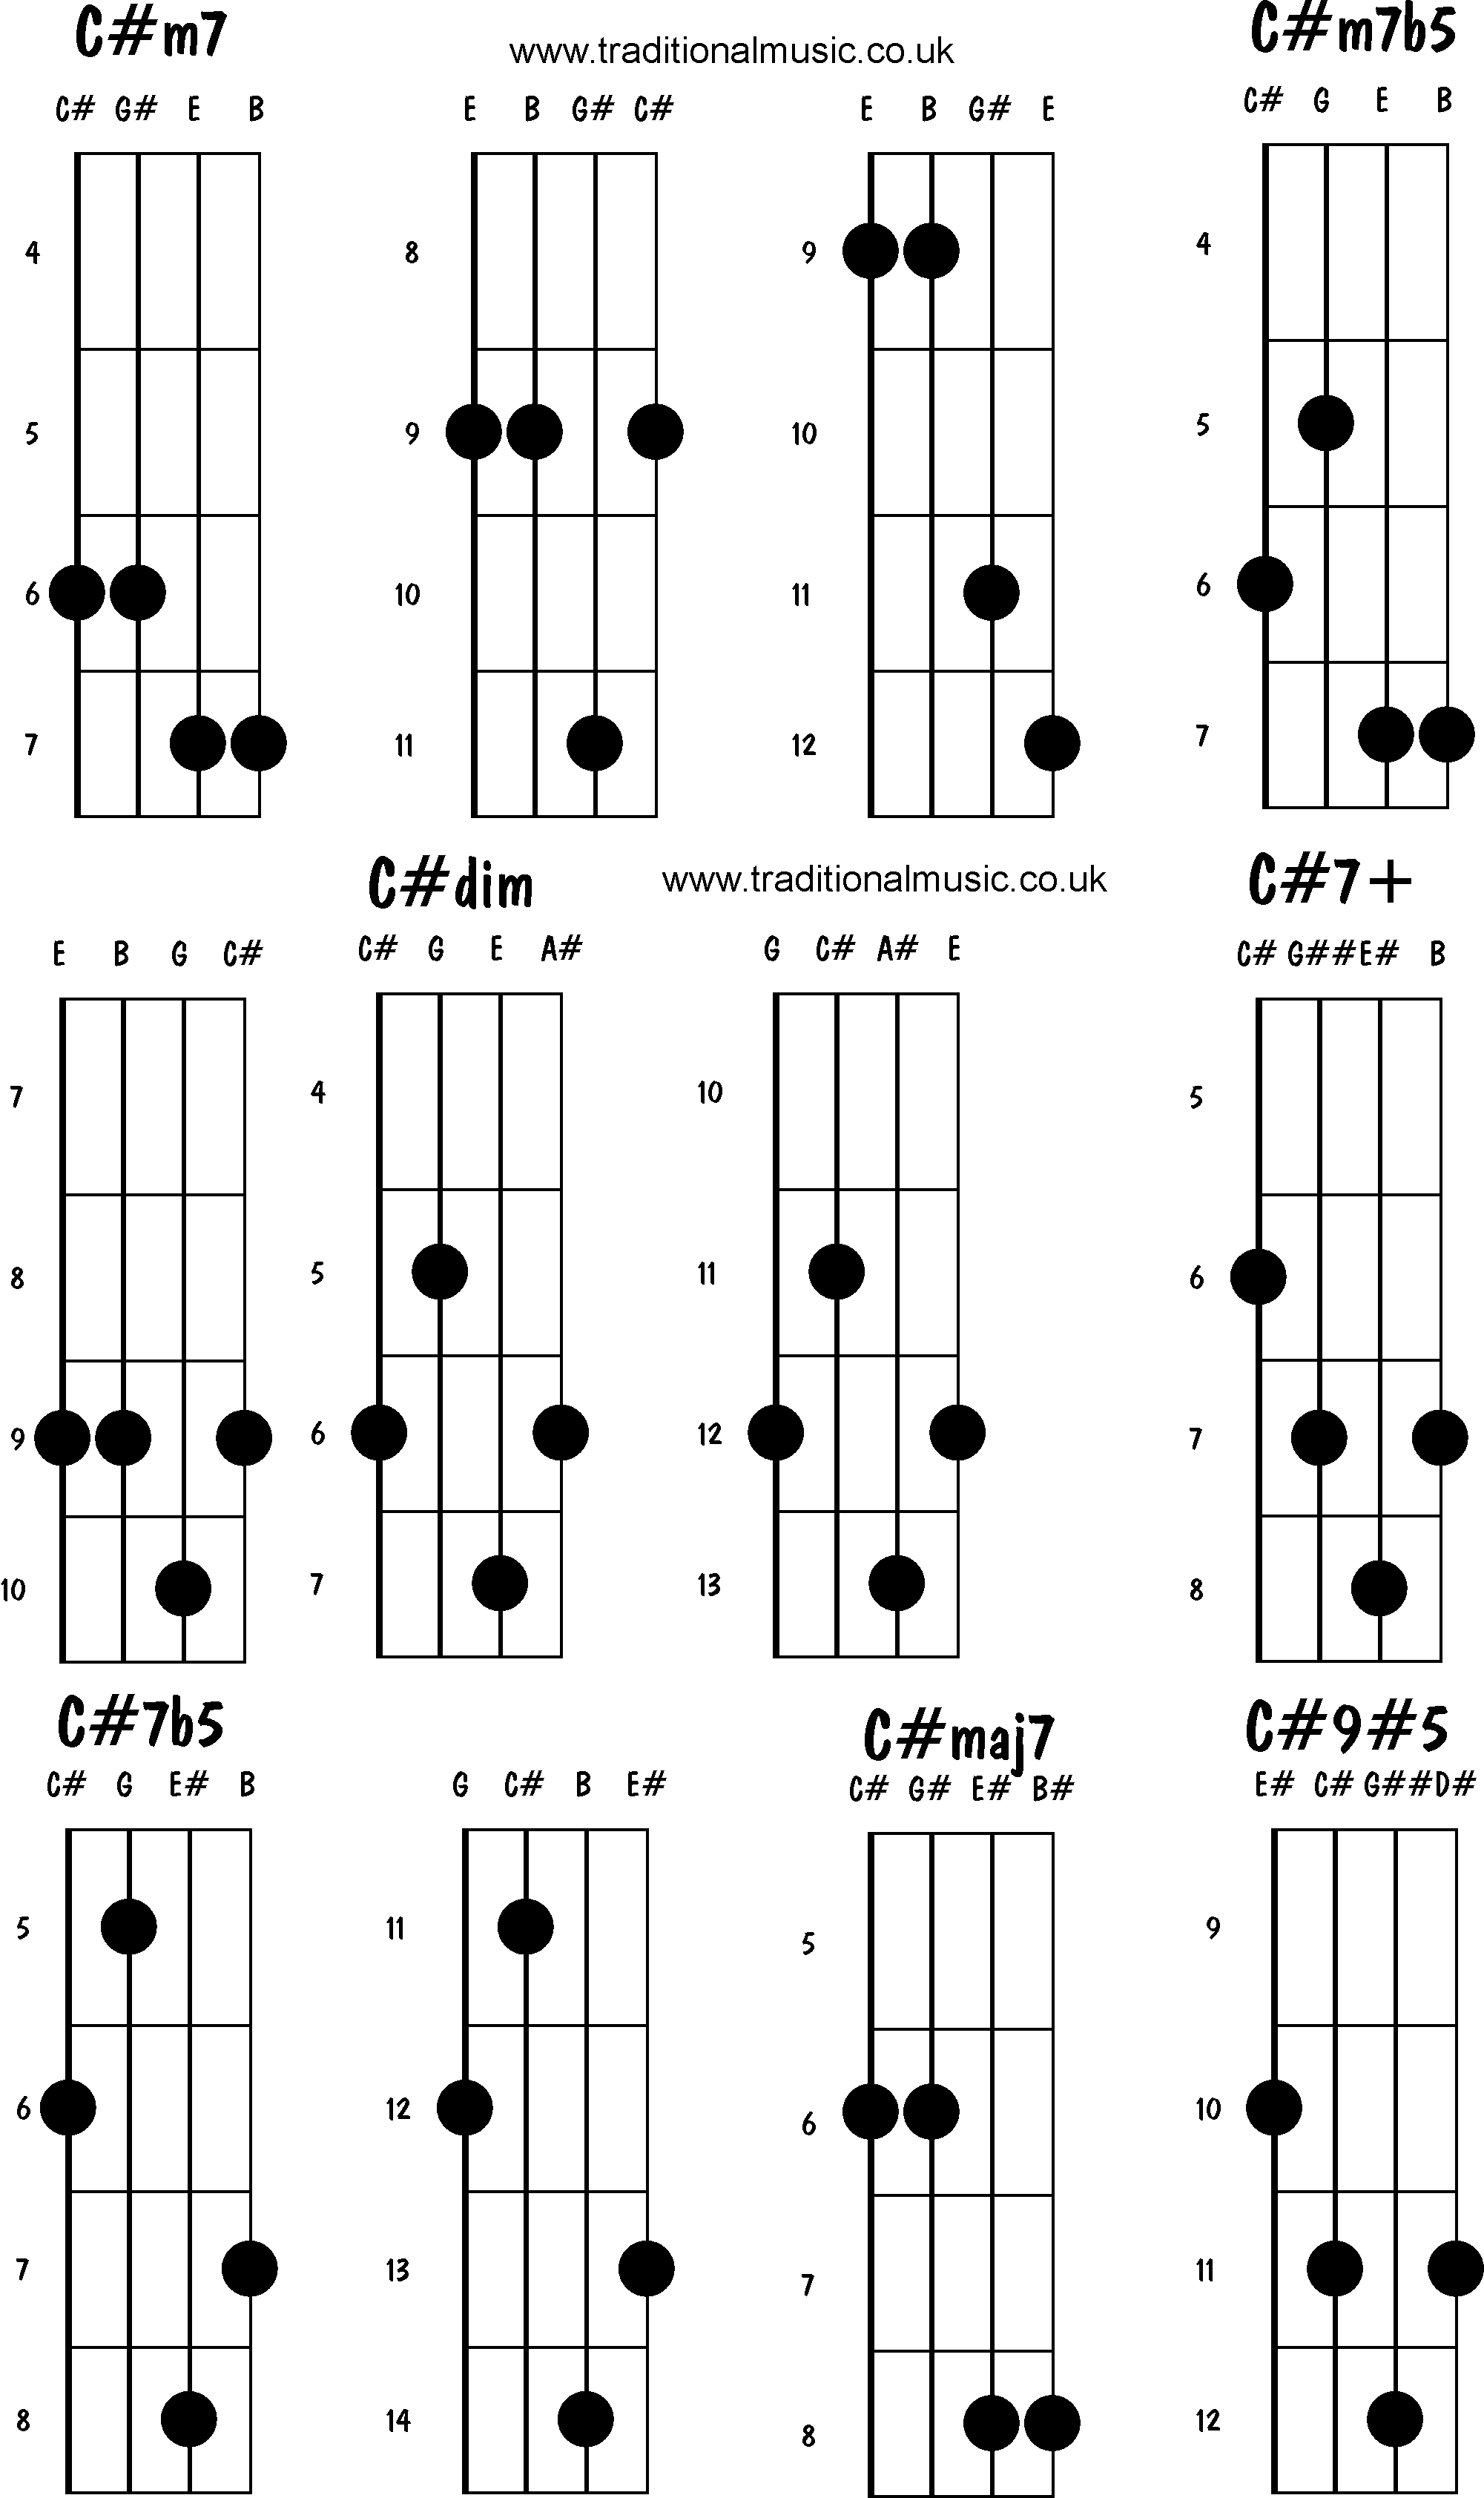 Advanced mandolin chords: C#m7, C#m7b5, C#dim, C#7+, C#7b5, C#maj7, C#9#5